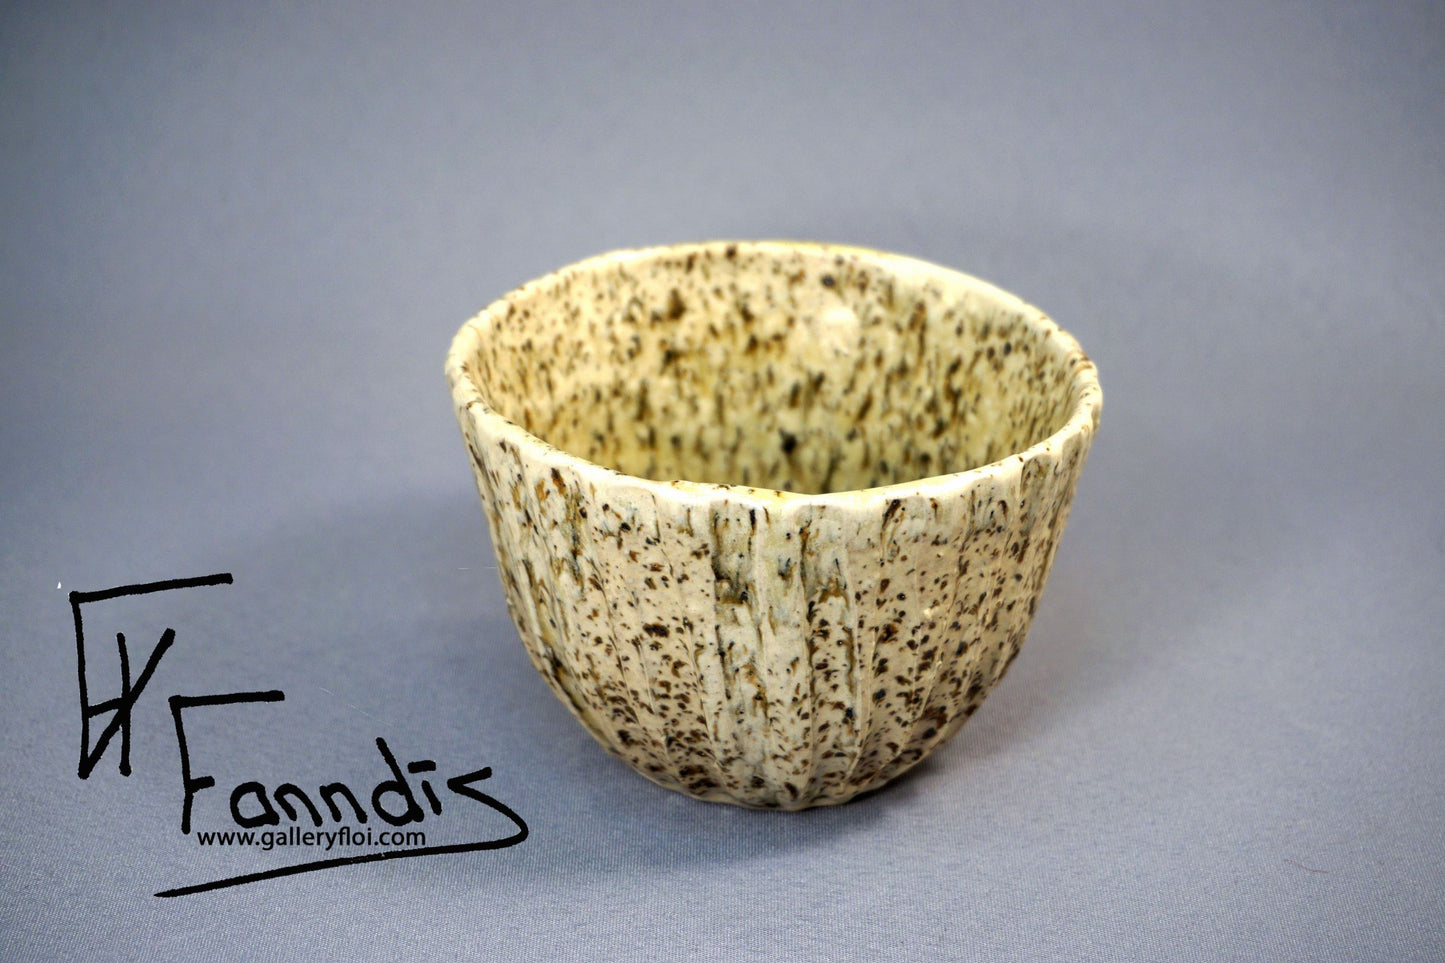 Flói skál með sandi úr Hvítá / Flói bowl with sand from glacier river Hvítá (350 ml)í